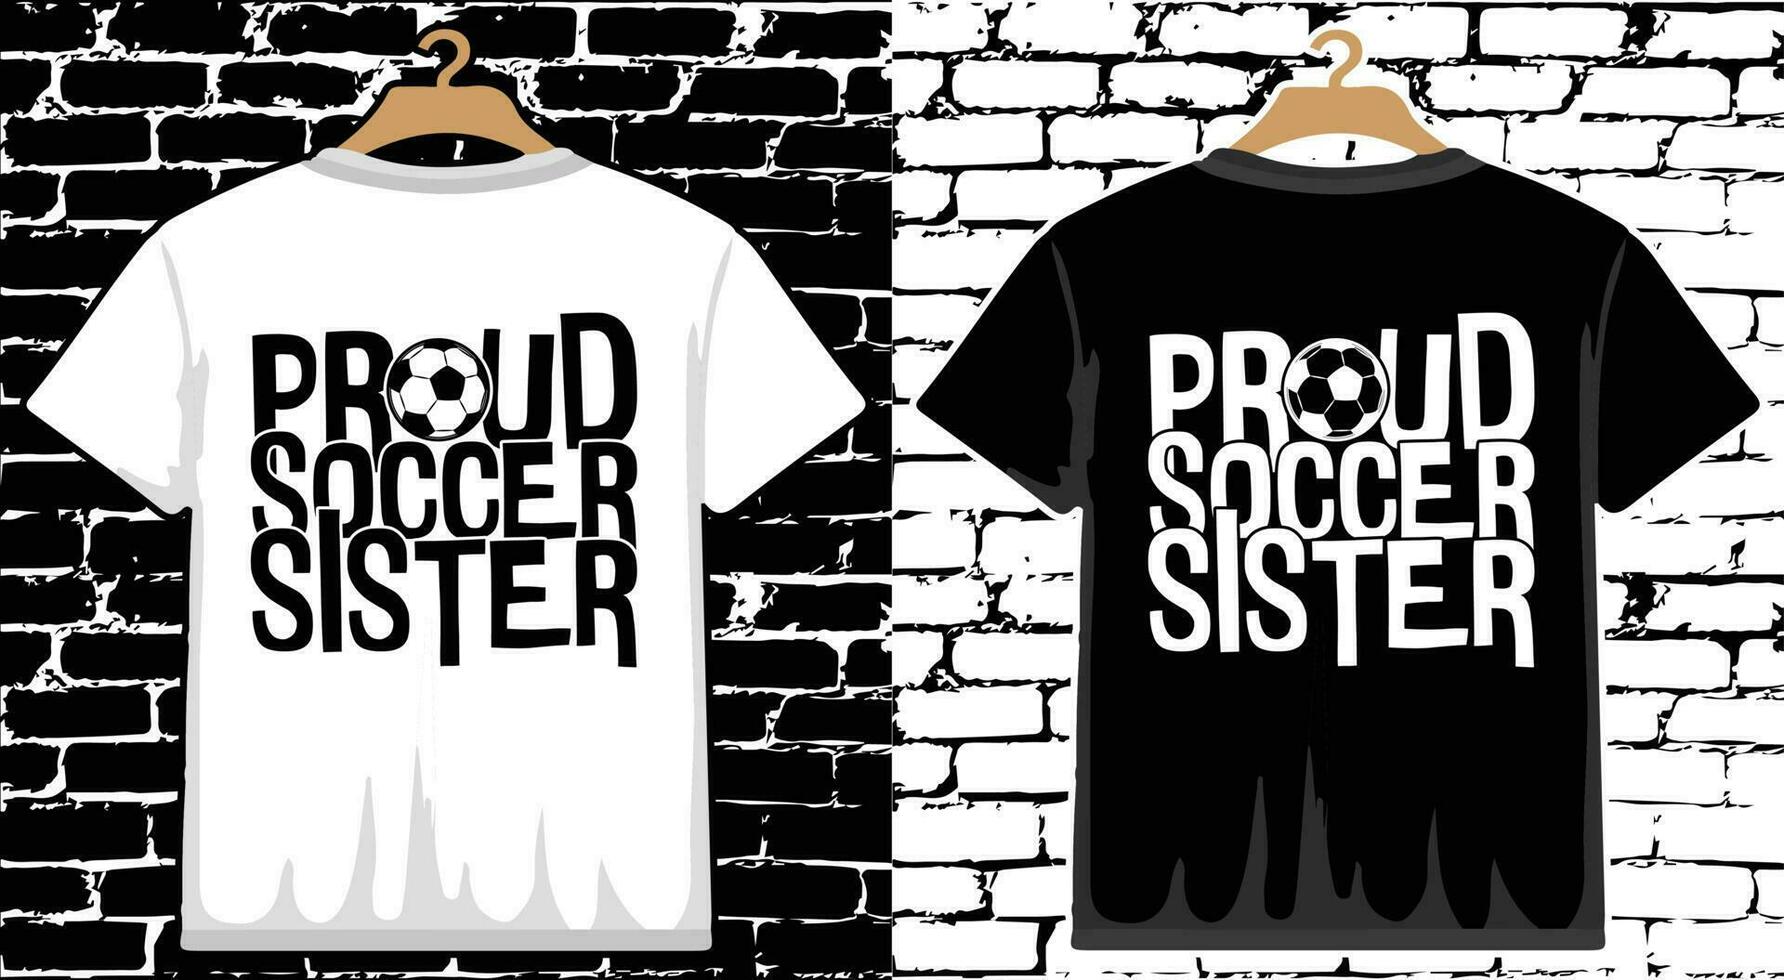 futebol t camisa projeto, vetor futebol t camisa projeto, futebol camisa, futebol tipografia t camisa Projeto